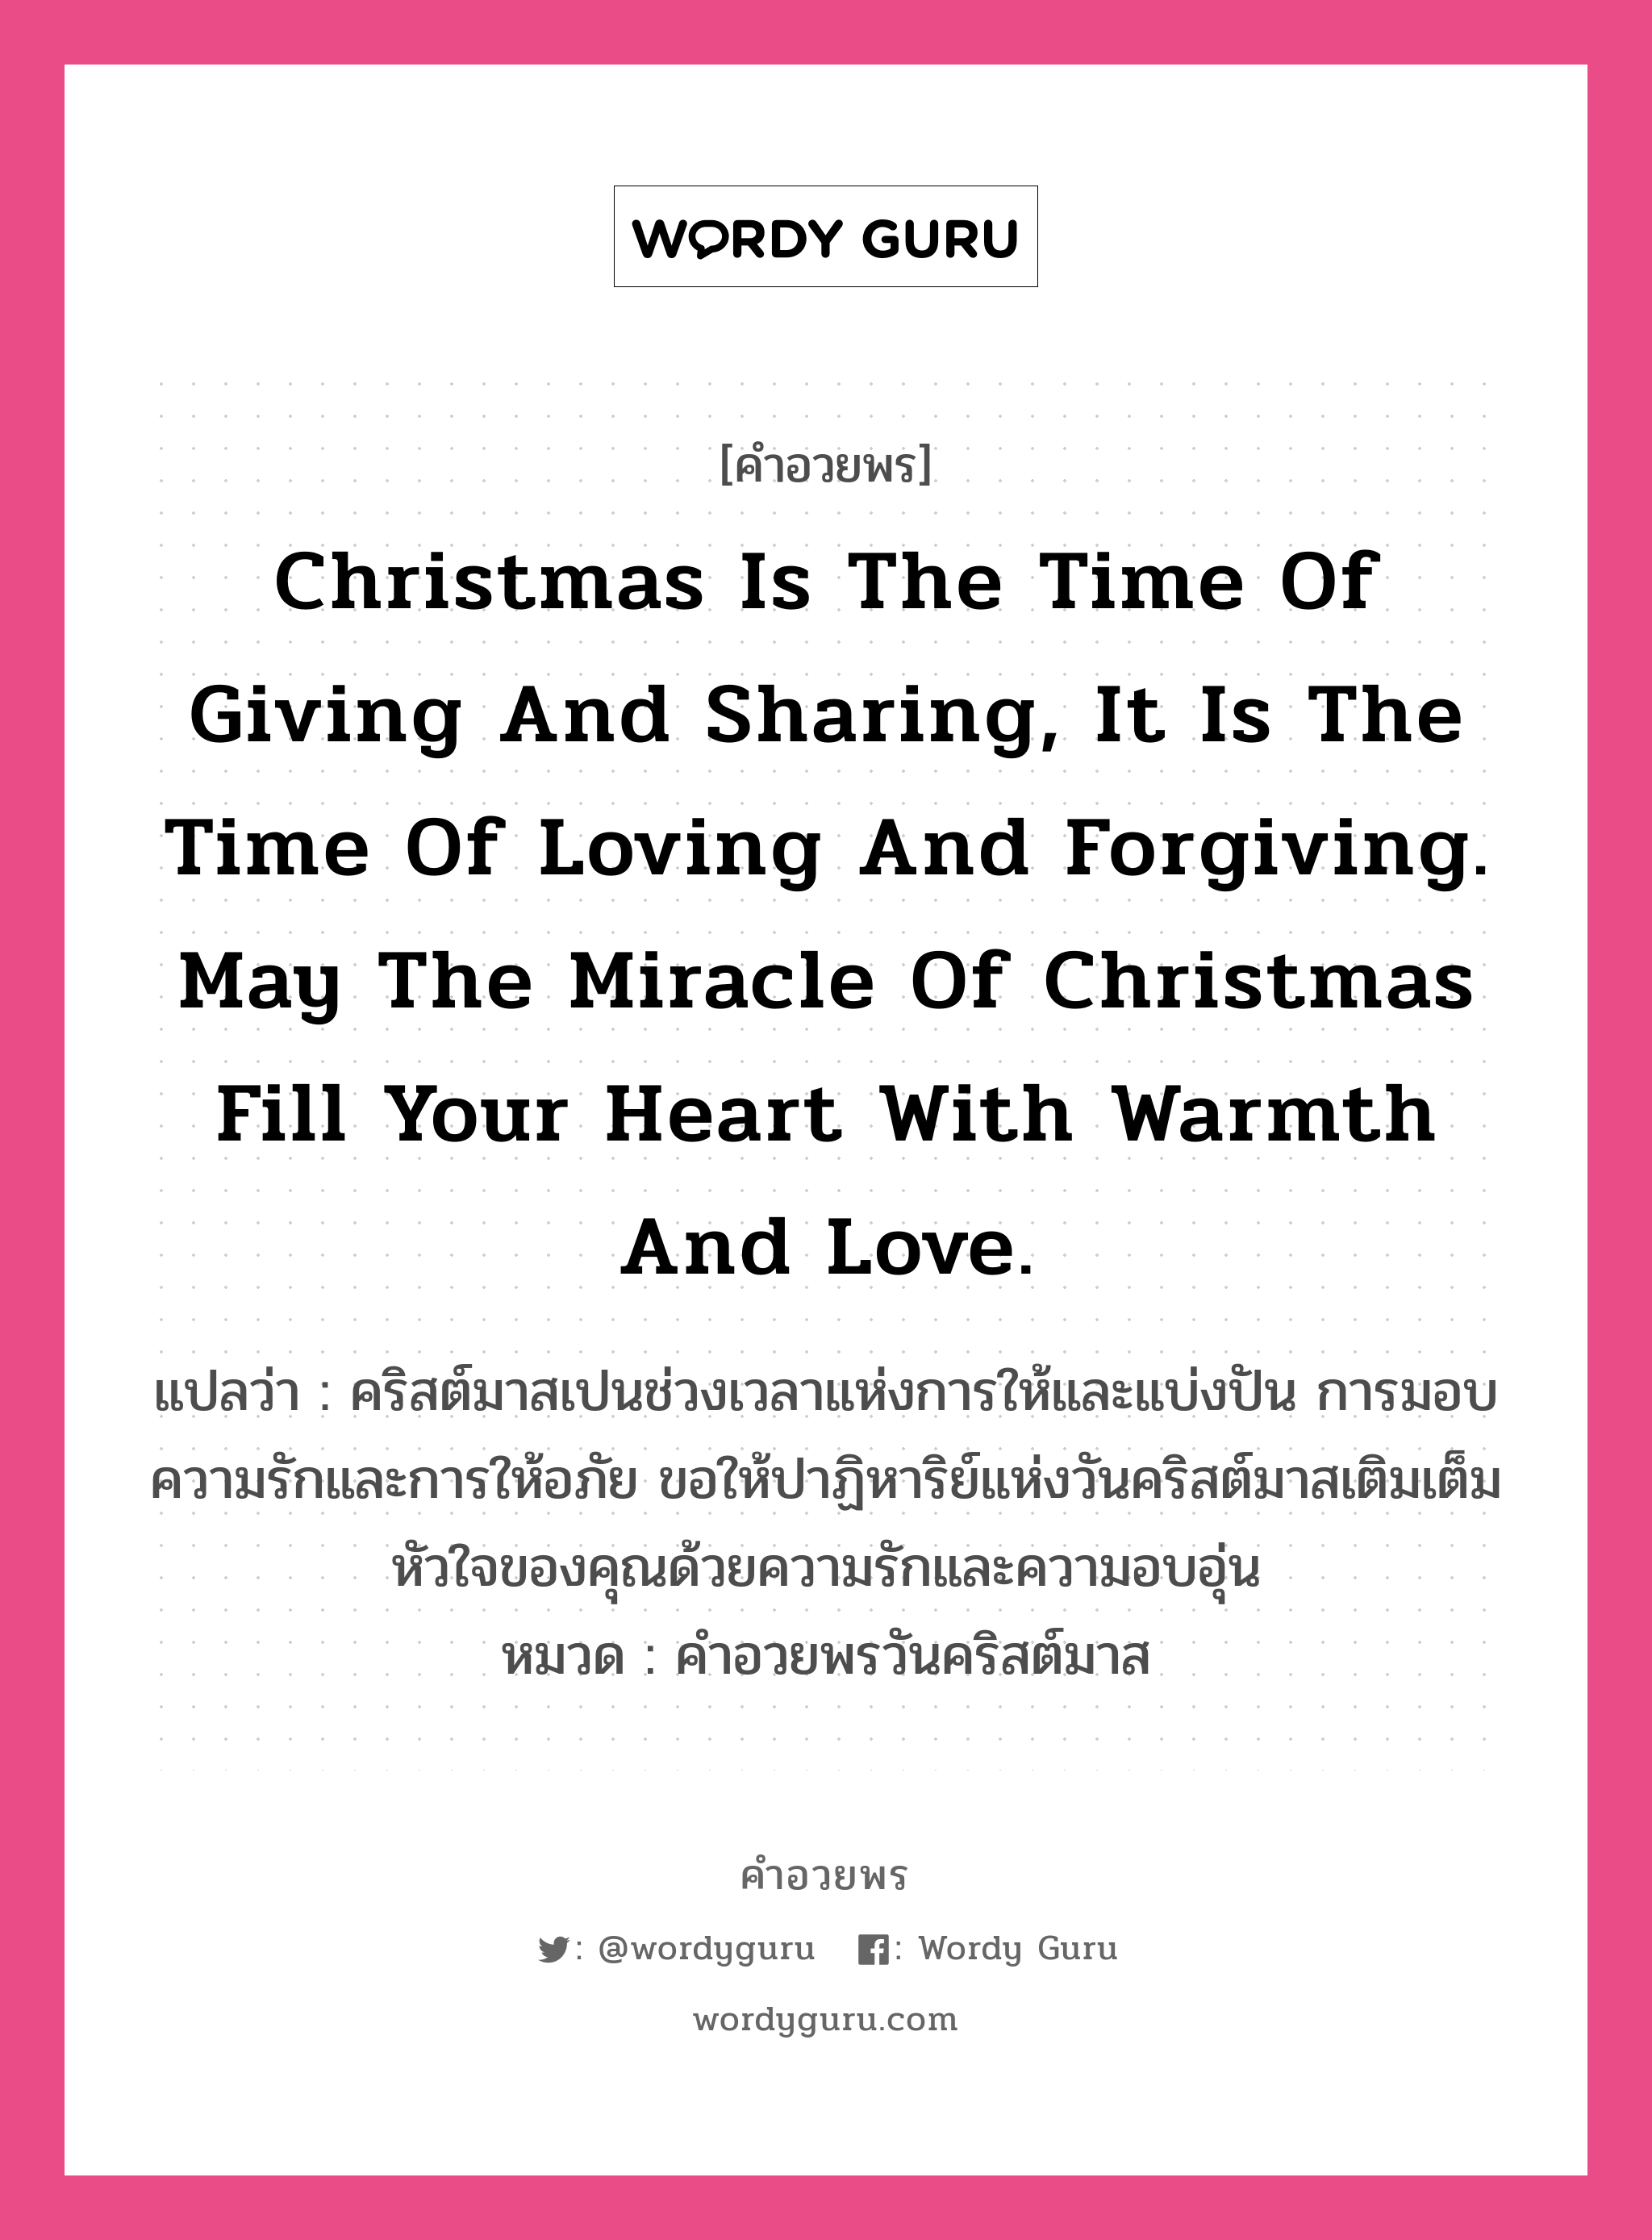 Christmas is the time of giving and sharing, it is the time of loving and forgiving. May the miracle of Christmas fill your heart with warmth and love. คำศัพท์ในกลุ่มประเภท คำอวยพรวันคริสต์มาส, แปลว่า คริสต์มาสเปนช่วงเวลาแห่งการให้และแบ่งปัน การมอบความรักและการให้อภัย ขอให้ปาฏิหาริย์แห่งวันคริสต์มาสเติมเต็มหัวใจของคุณด้วยความรักและความอบอุ่น หมวด คำอวยพรวันคริสต์มาส หมวด คำอวยพรวันคริสต์มาส